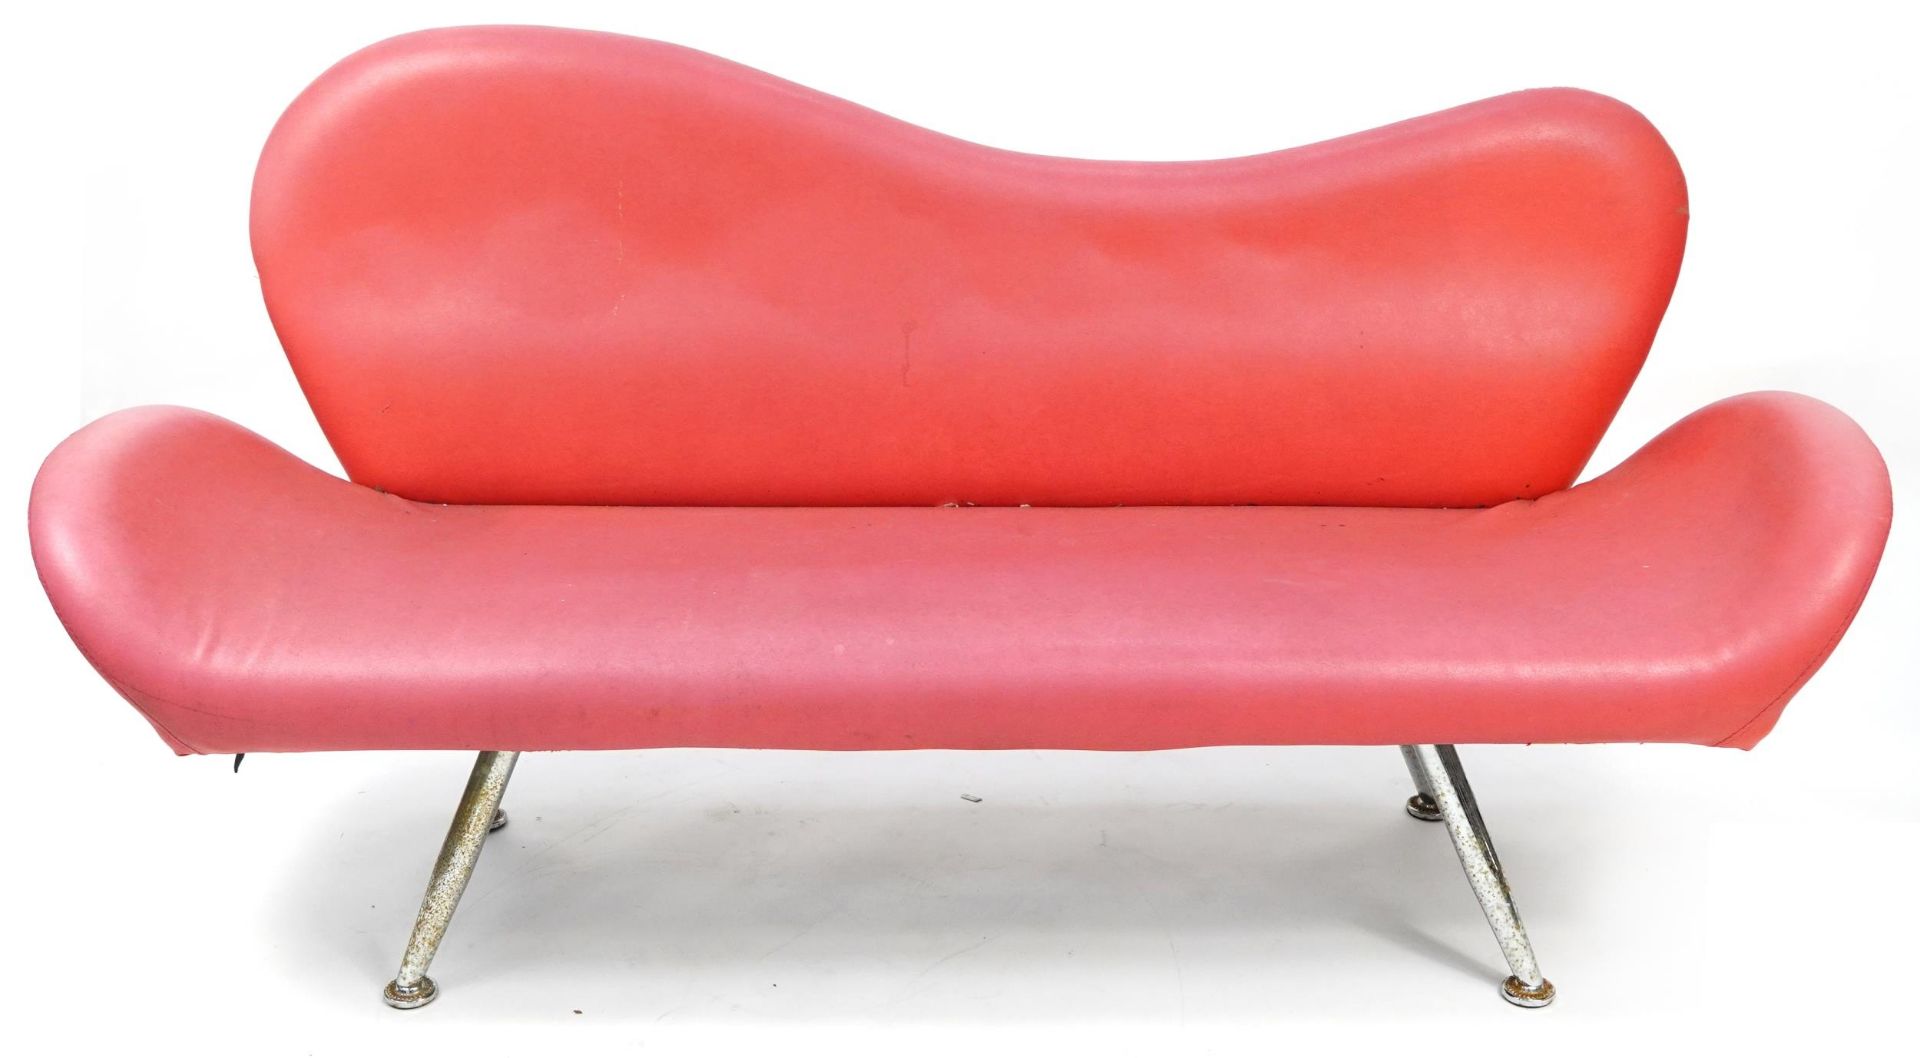 Red leather lips design salon settee raised on chrome legs, 180cm wide